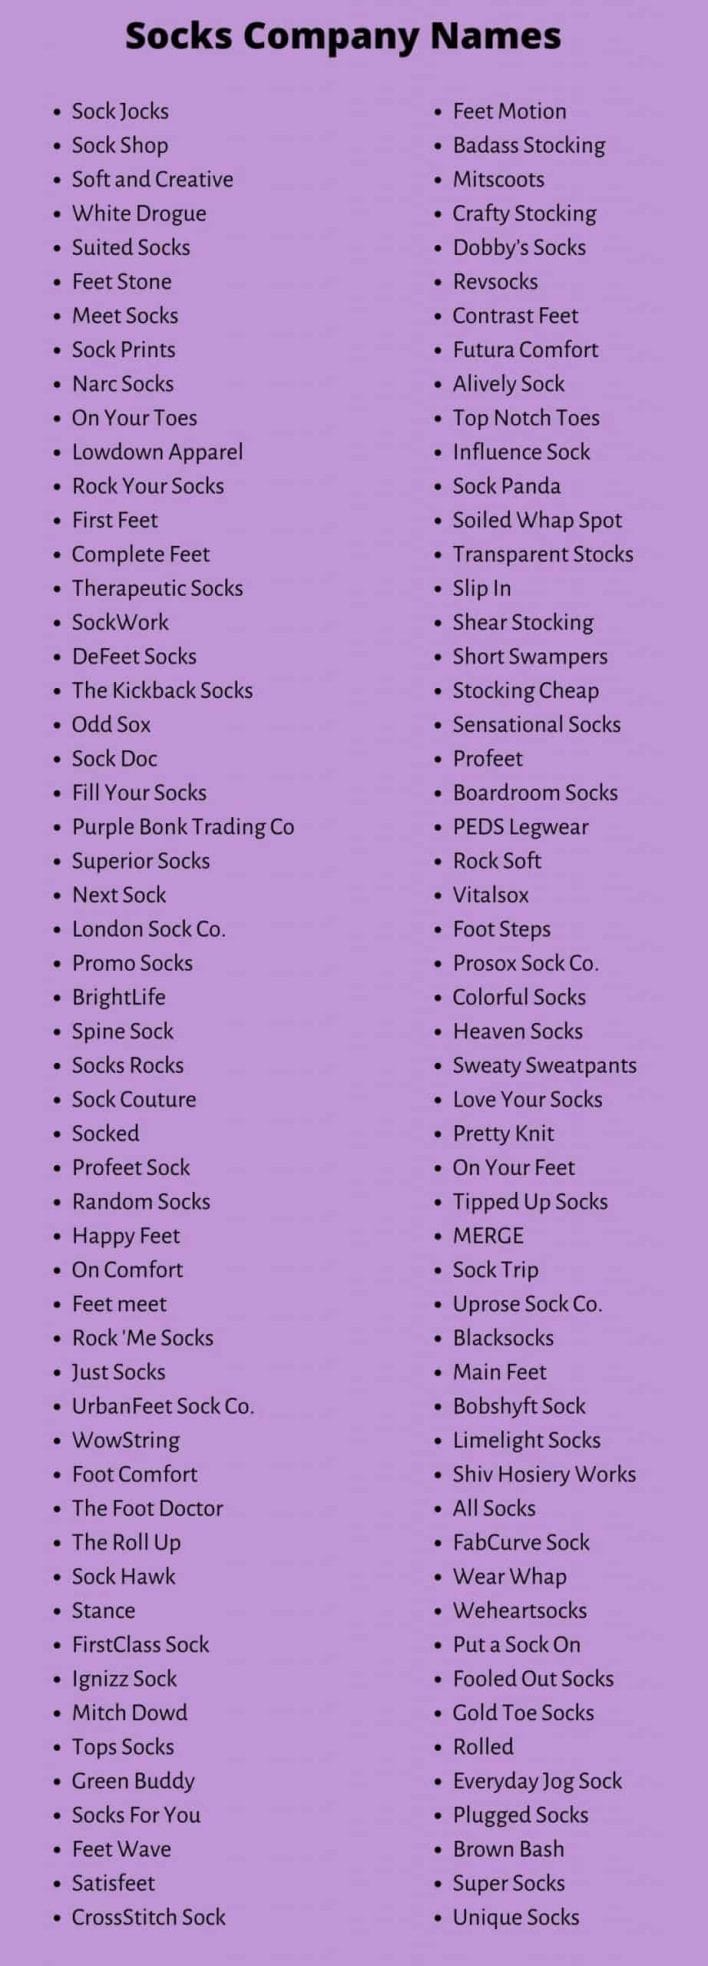 Socks Company Names